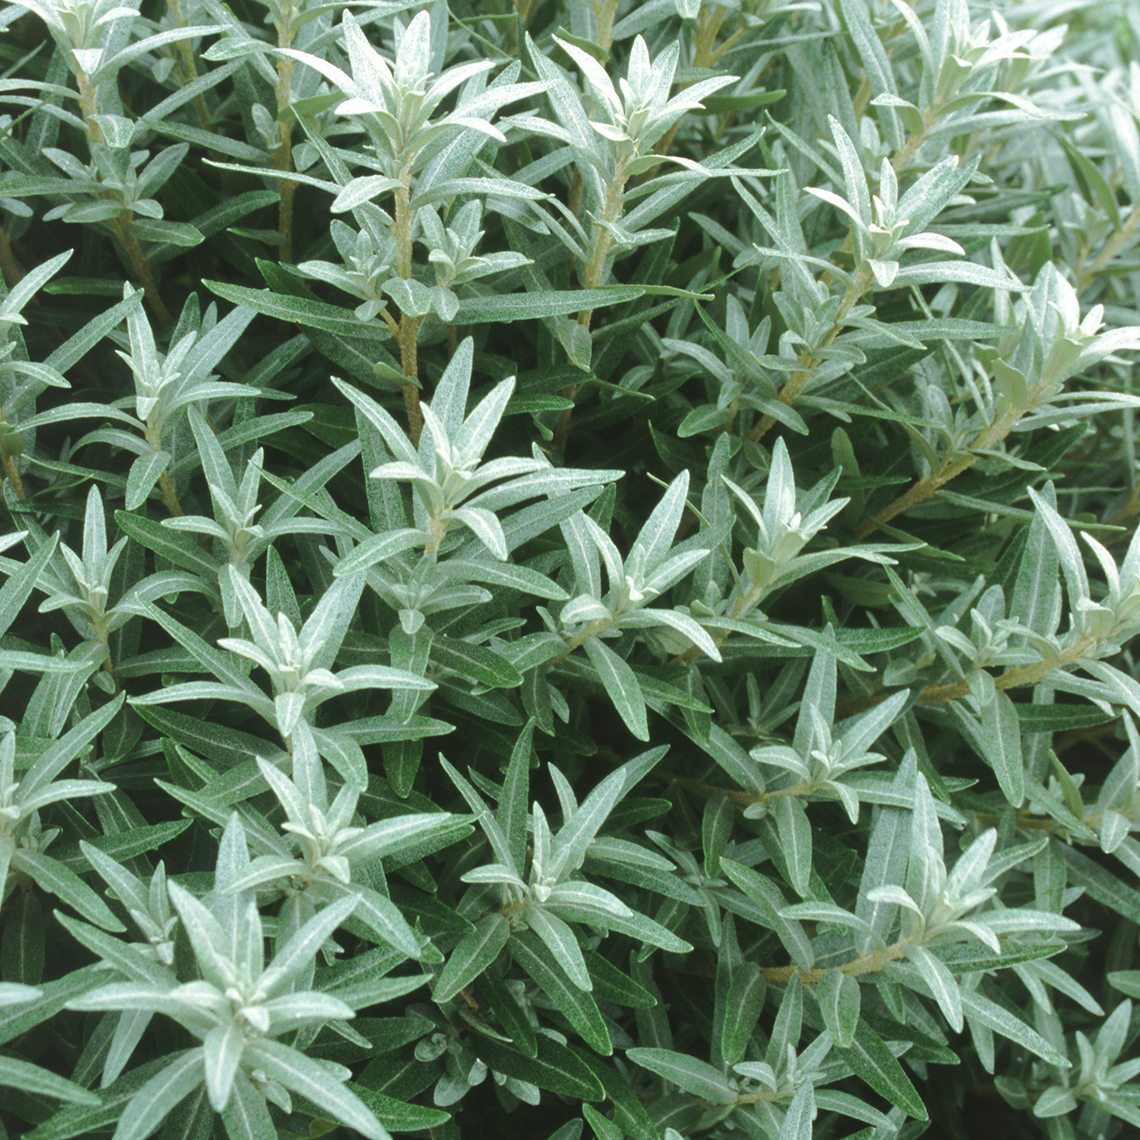 Closeup of the silver foliage of Sprite sea buckthorn